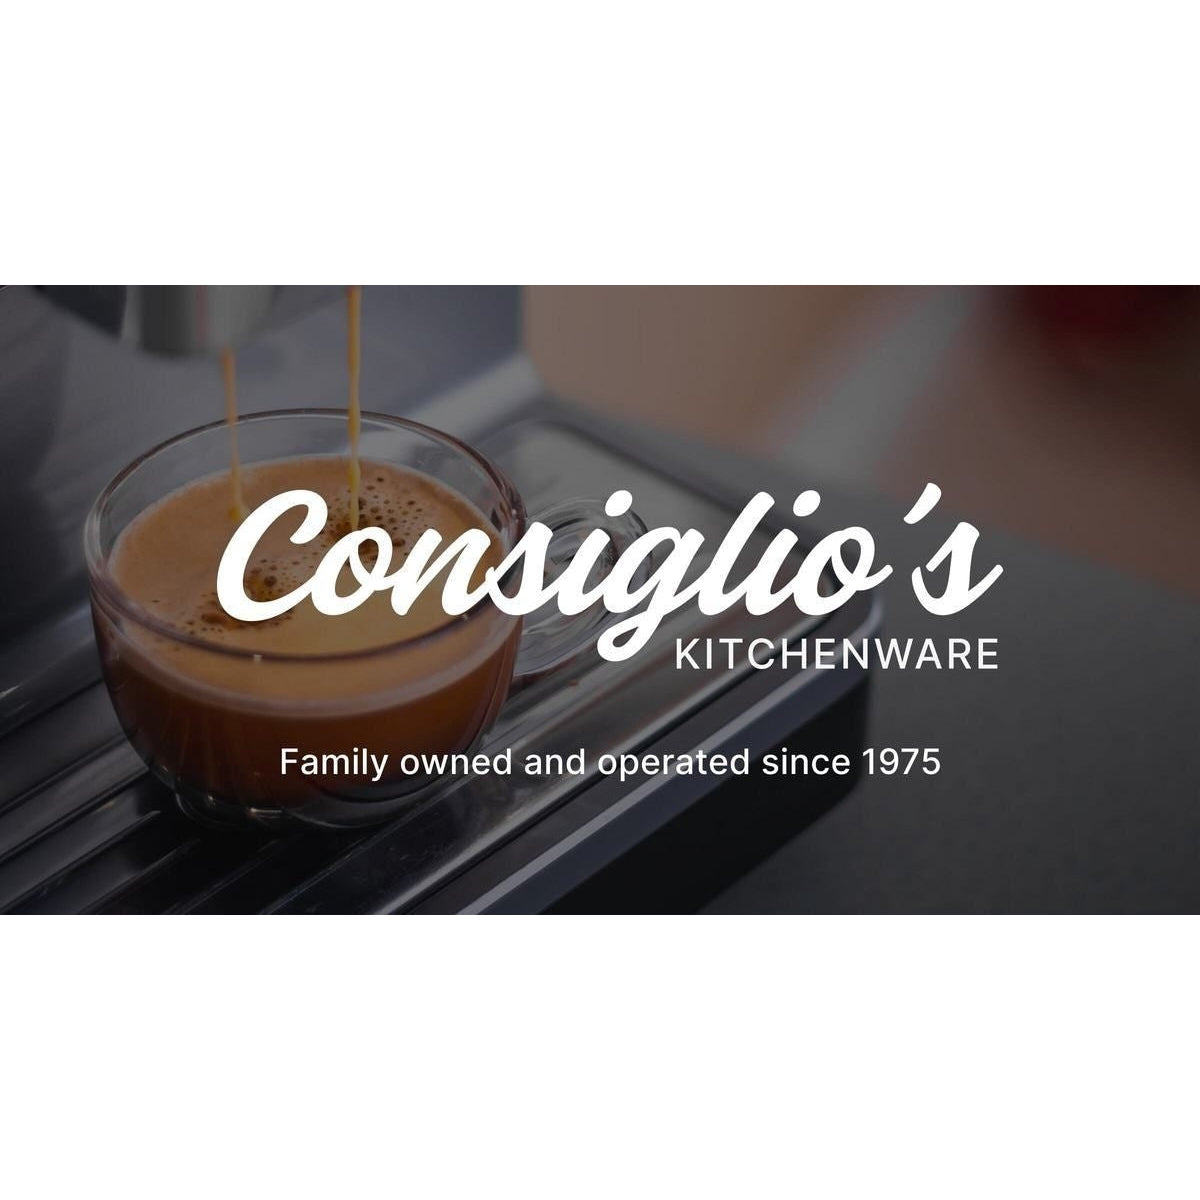 Consiglio's Kitchenware Family Ran Since 1975!